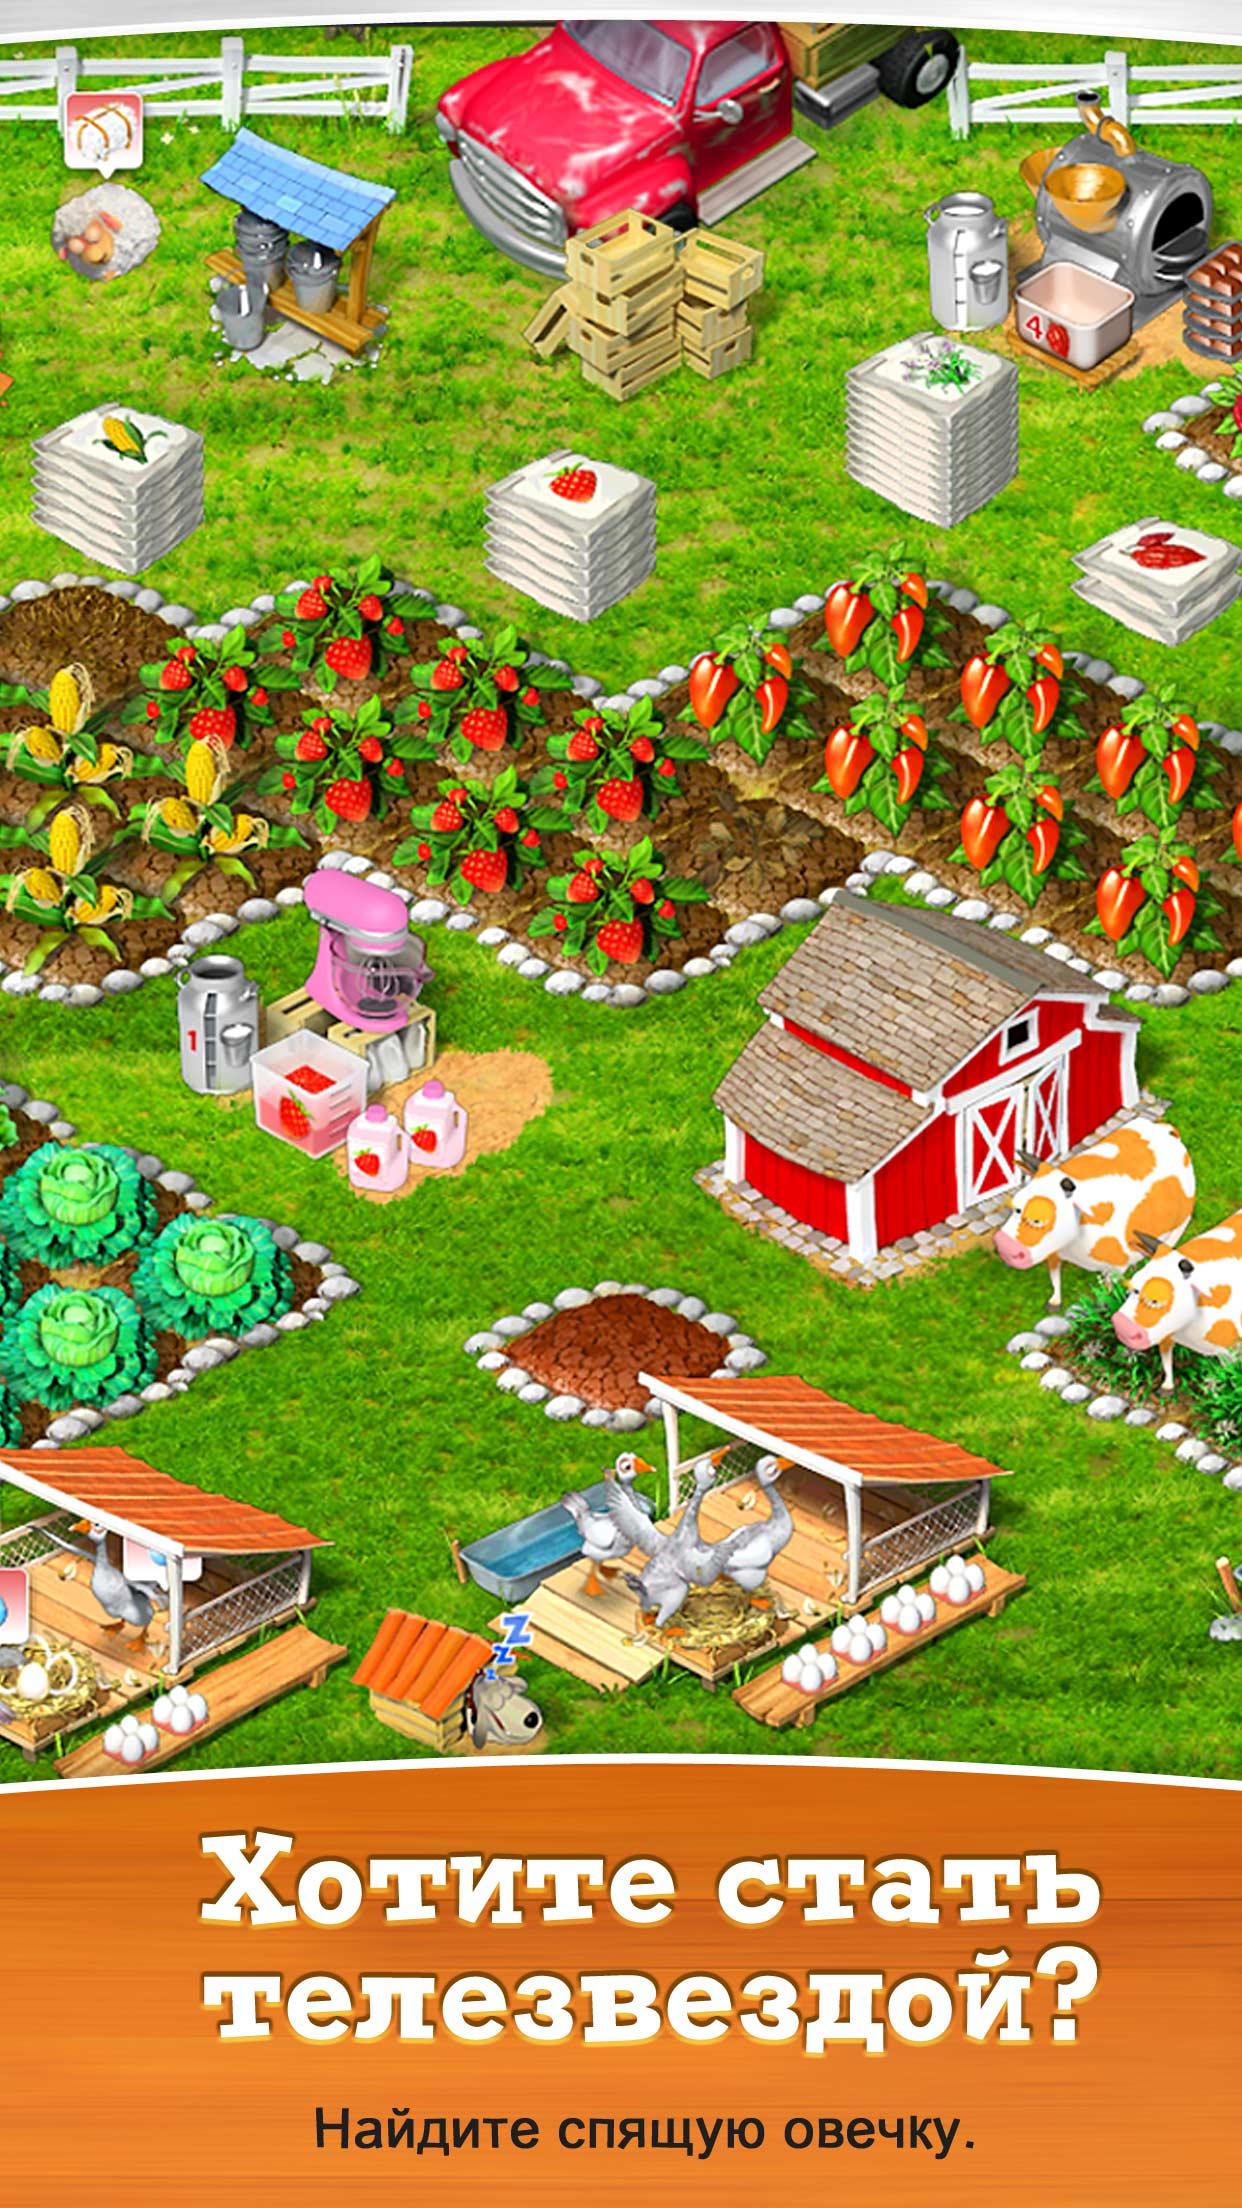 Android application Hobby Farm Show (Full) screenshort